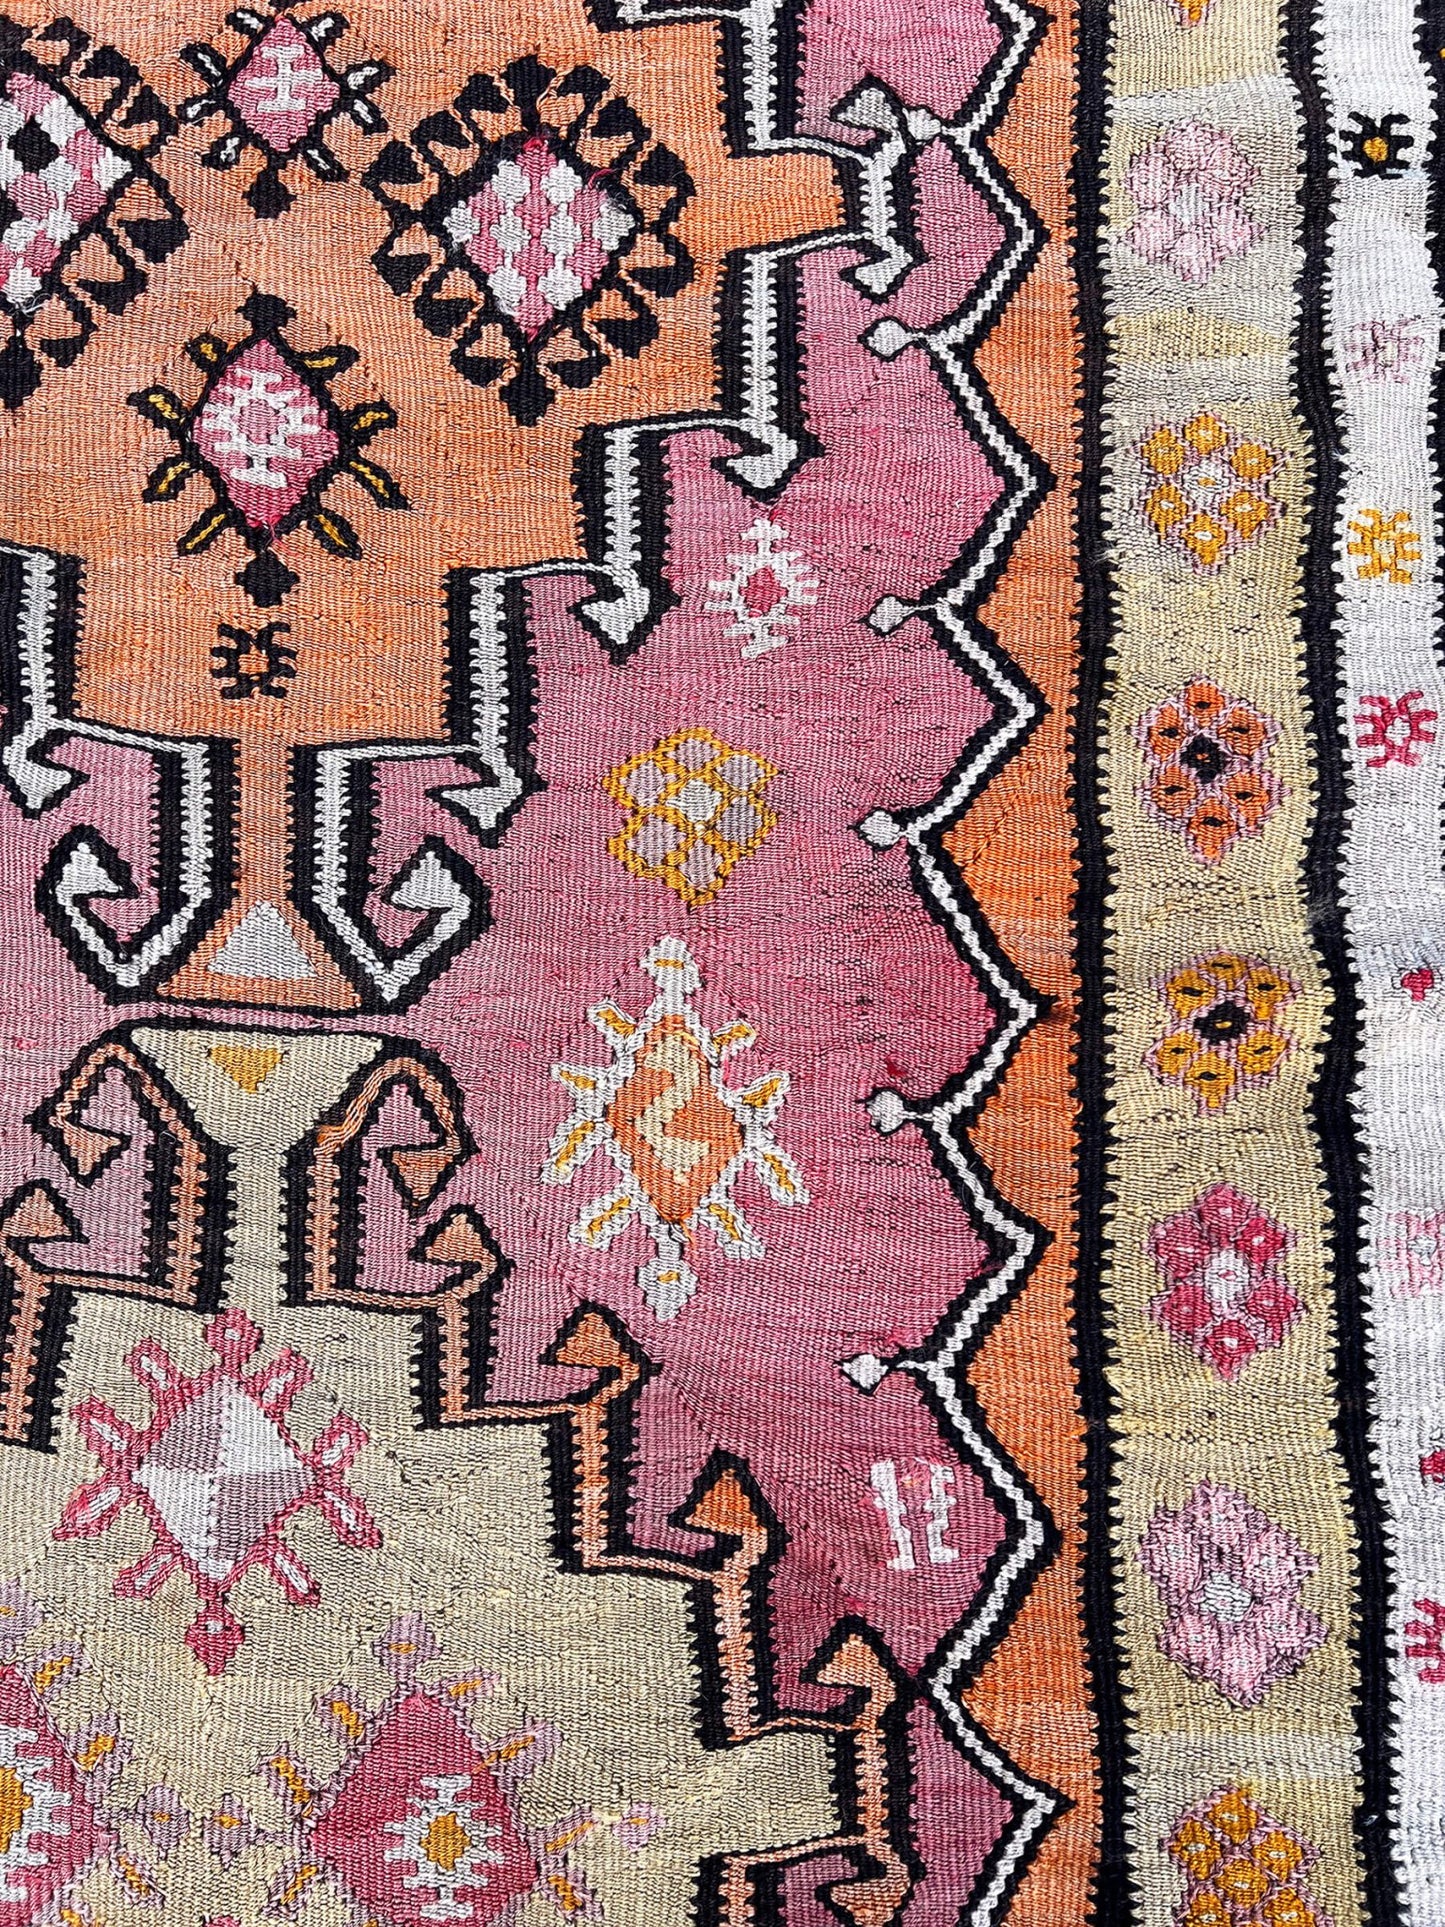 Kars vintage turkish kilim runner rug shop san francisco bay area berkeley. Buy kilim rug online canada, free shipping